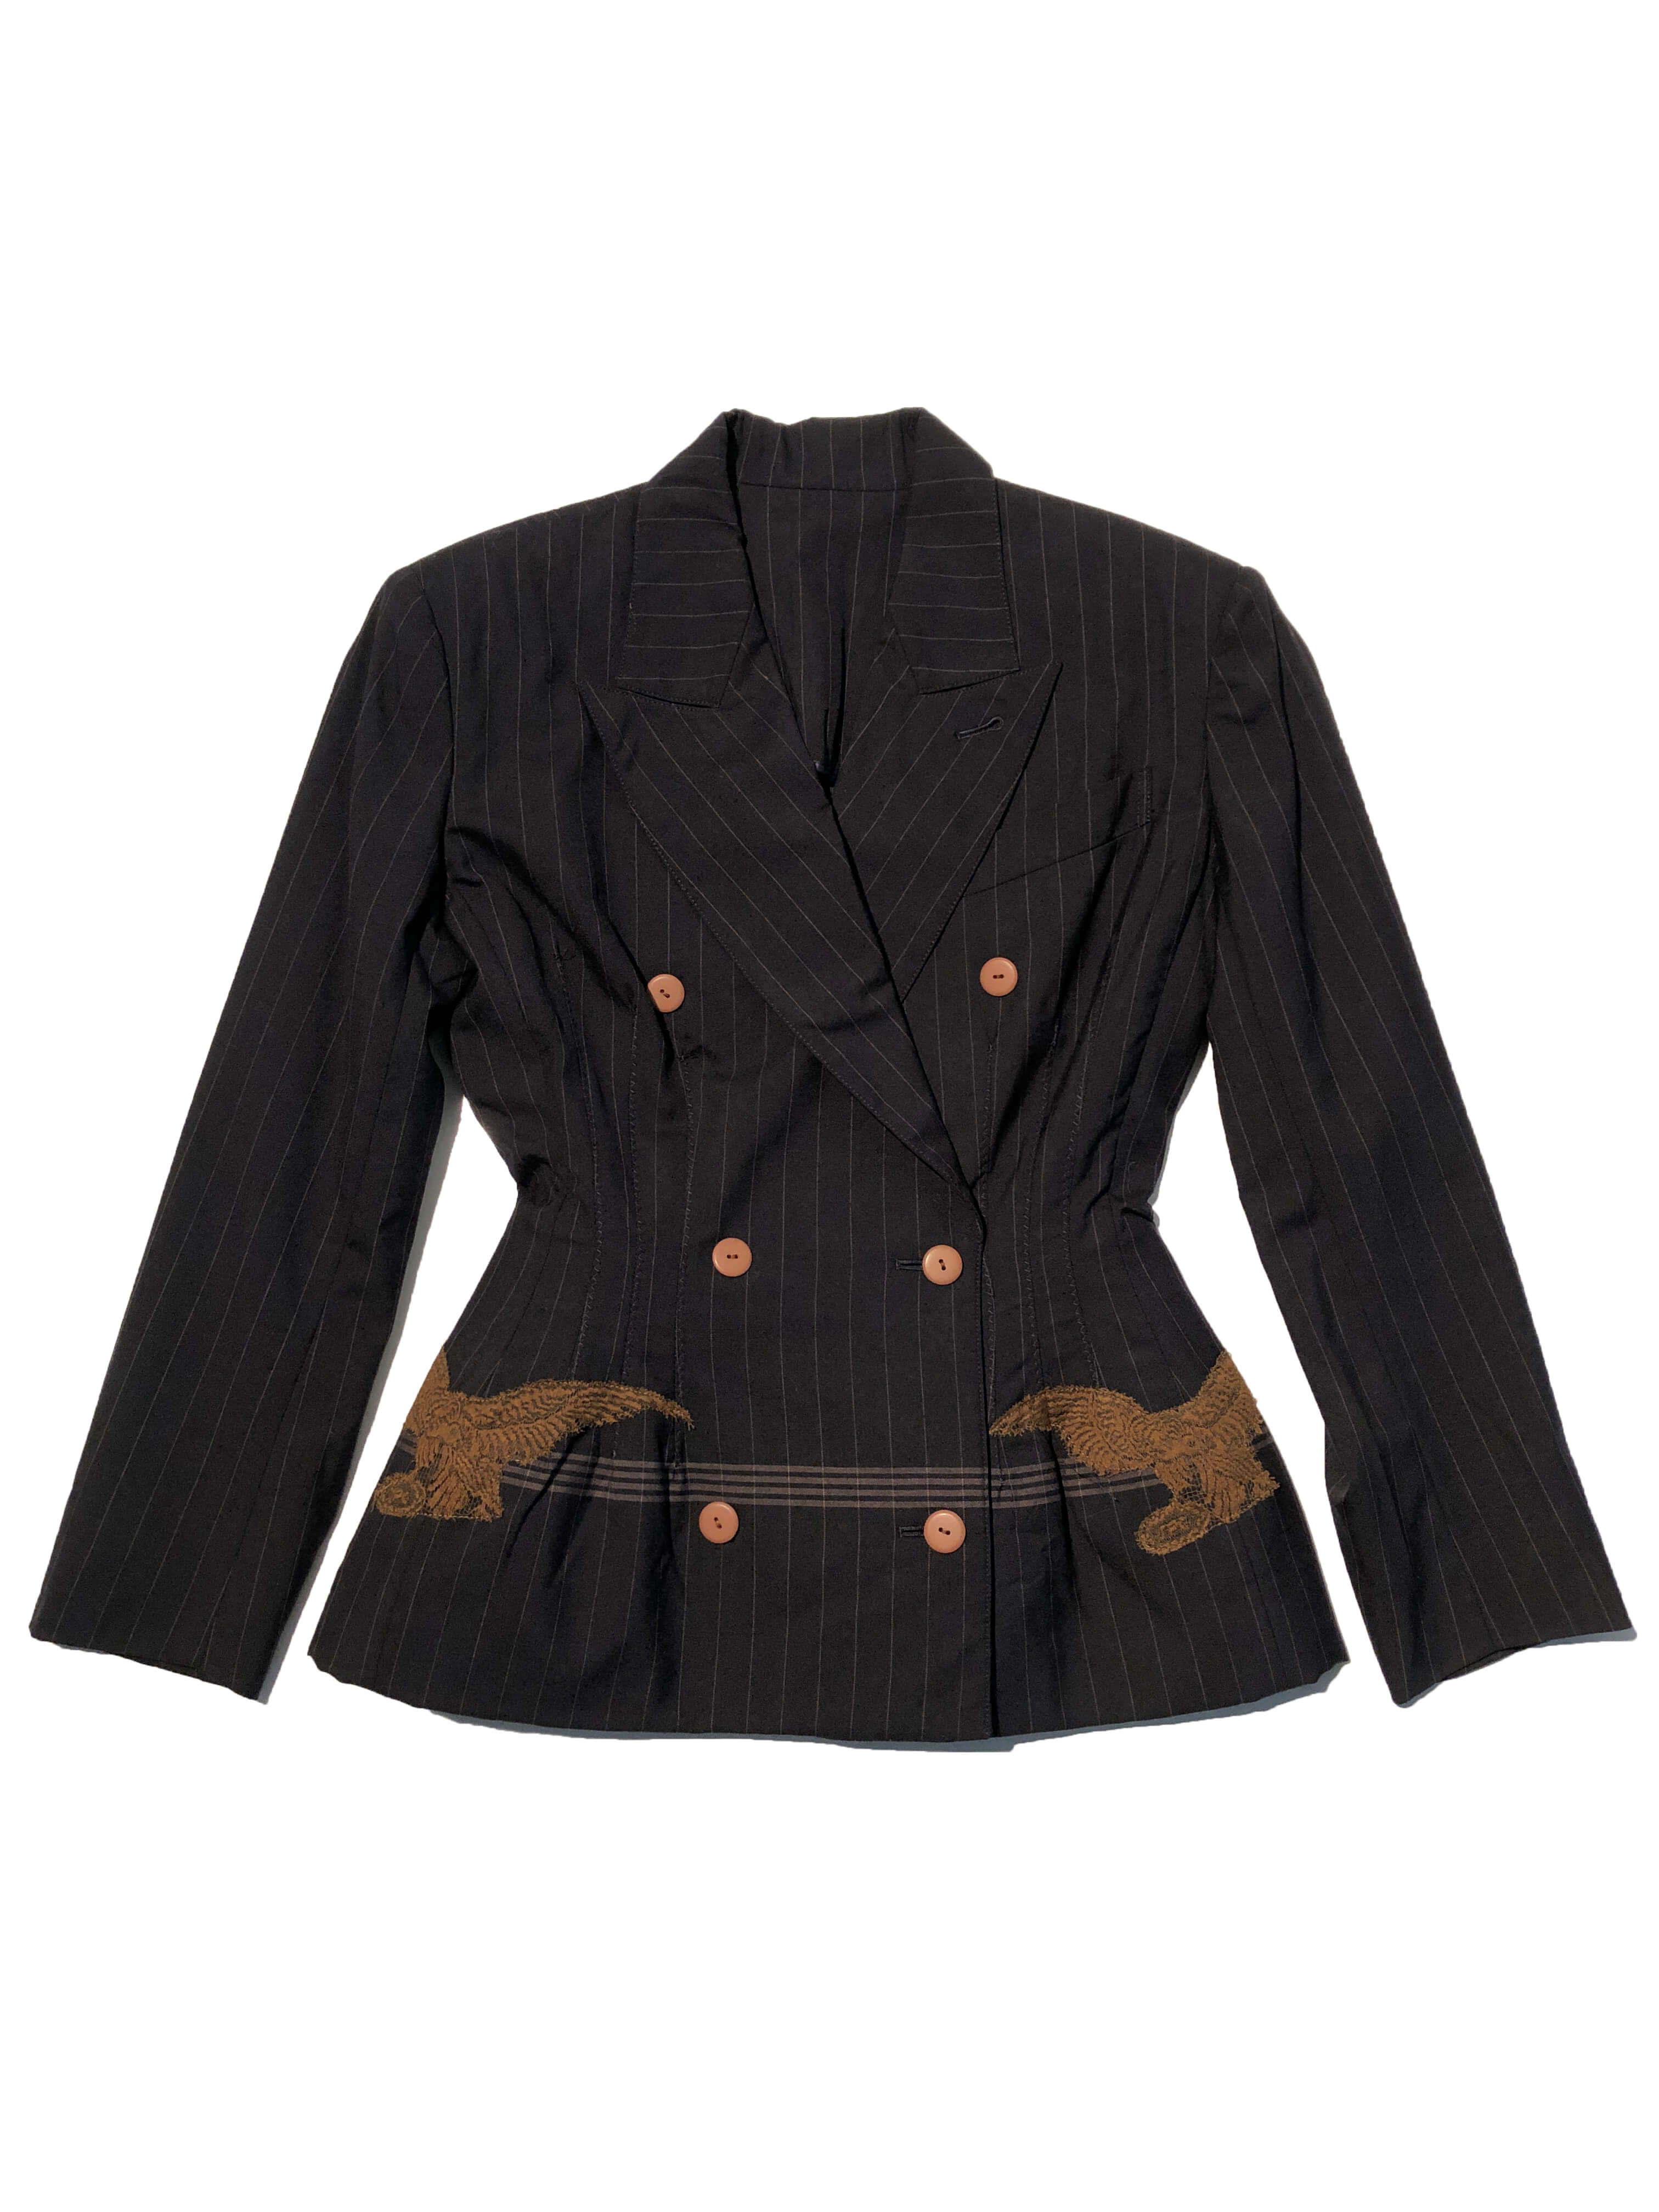 Jean Paul Gaultier 90s embroidery jacket